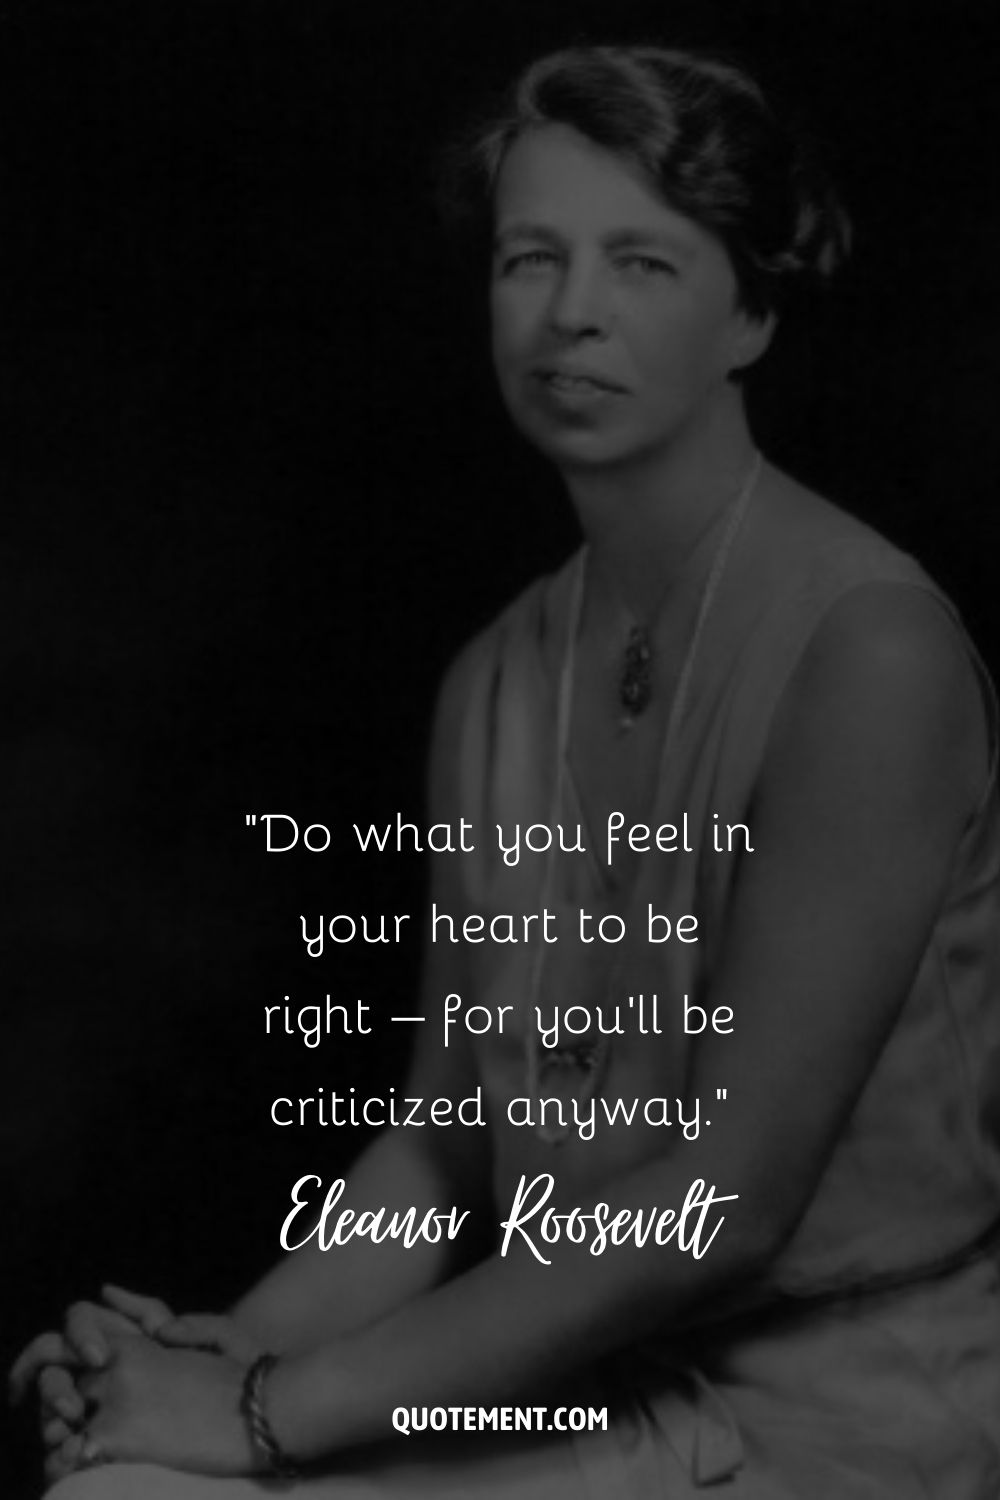 Image of gracious Eleanor representing the greatest Eleanor Roosevelt quote.
